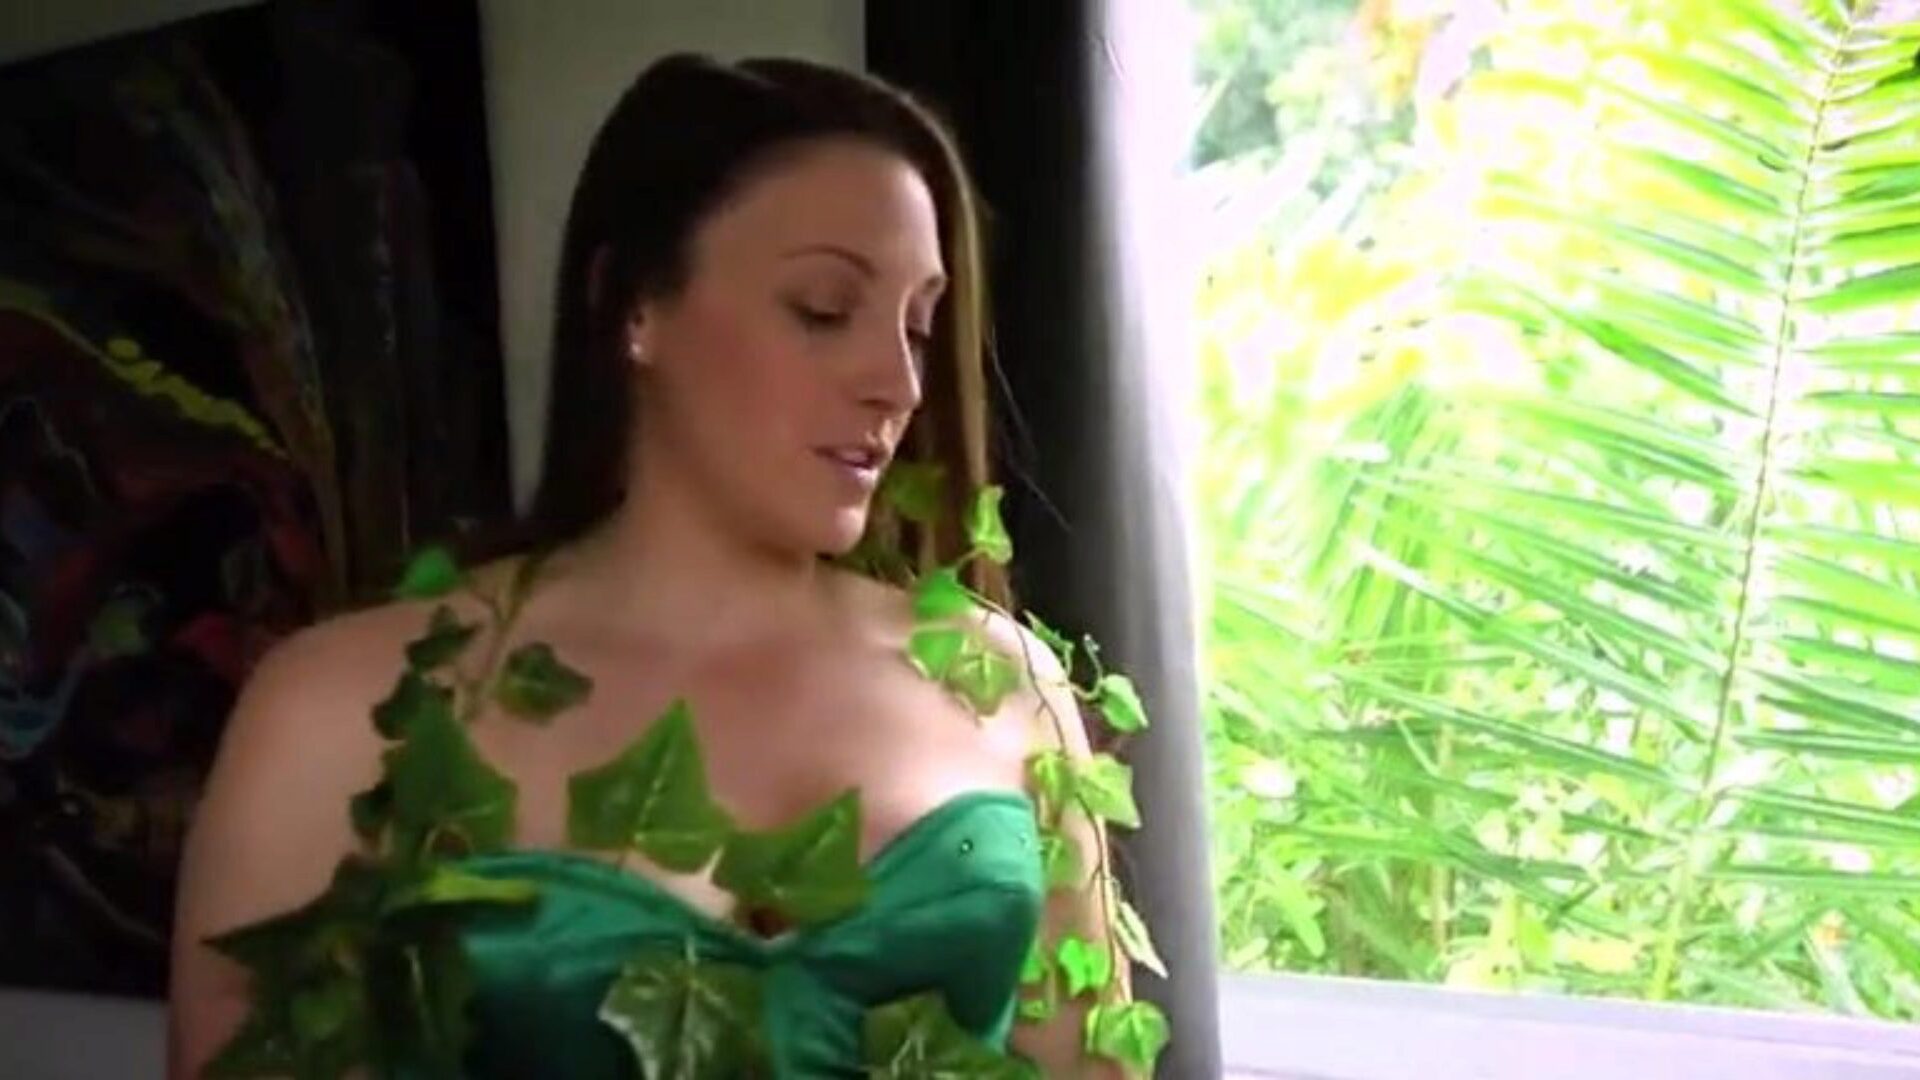 Melanie hicks poison ivy